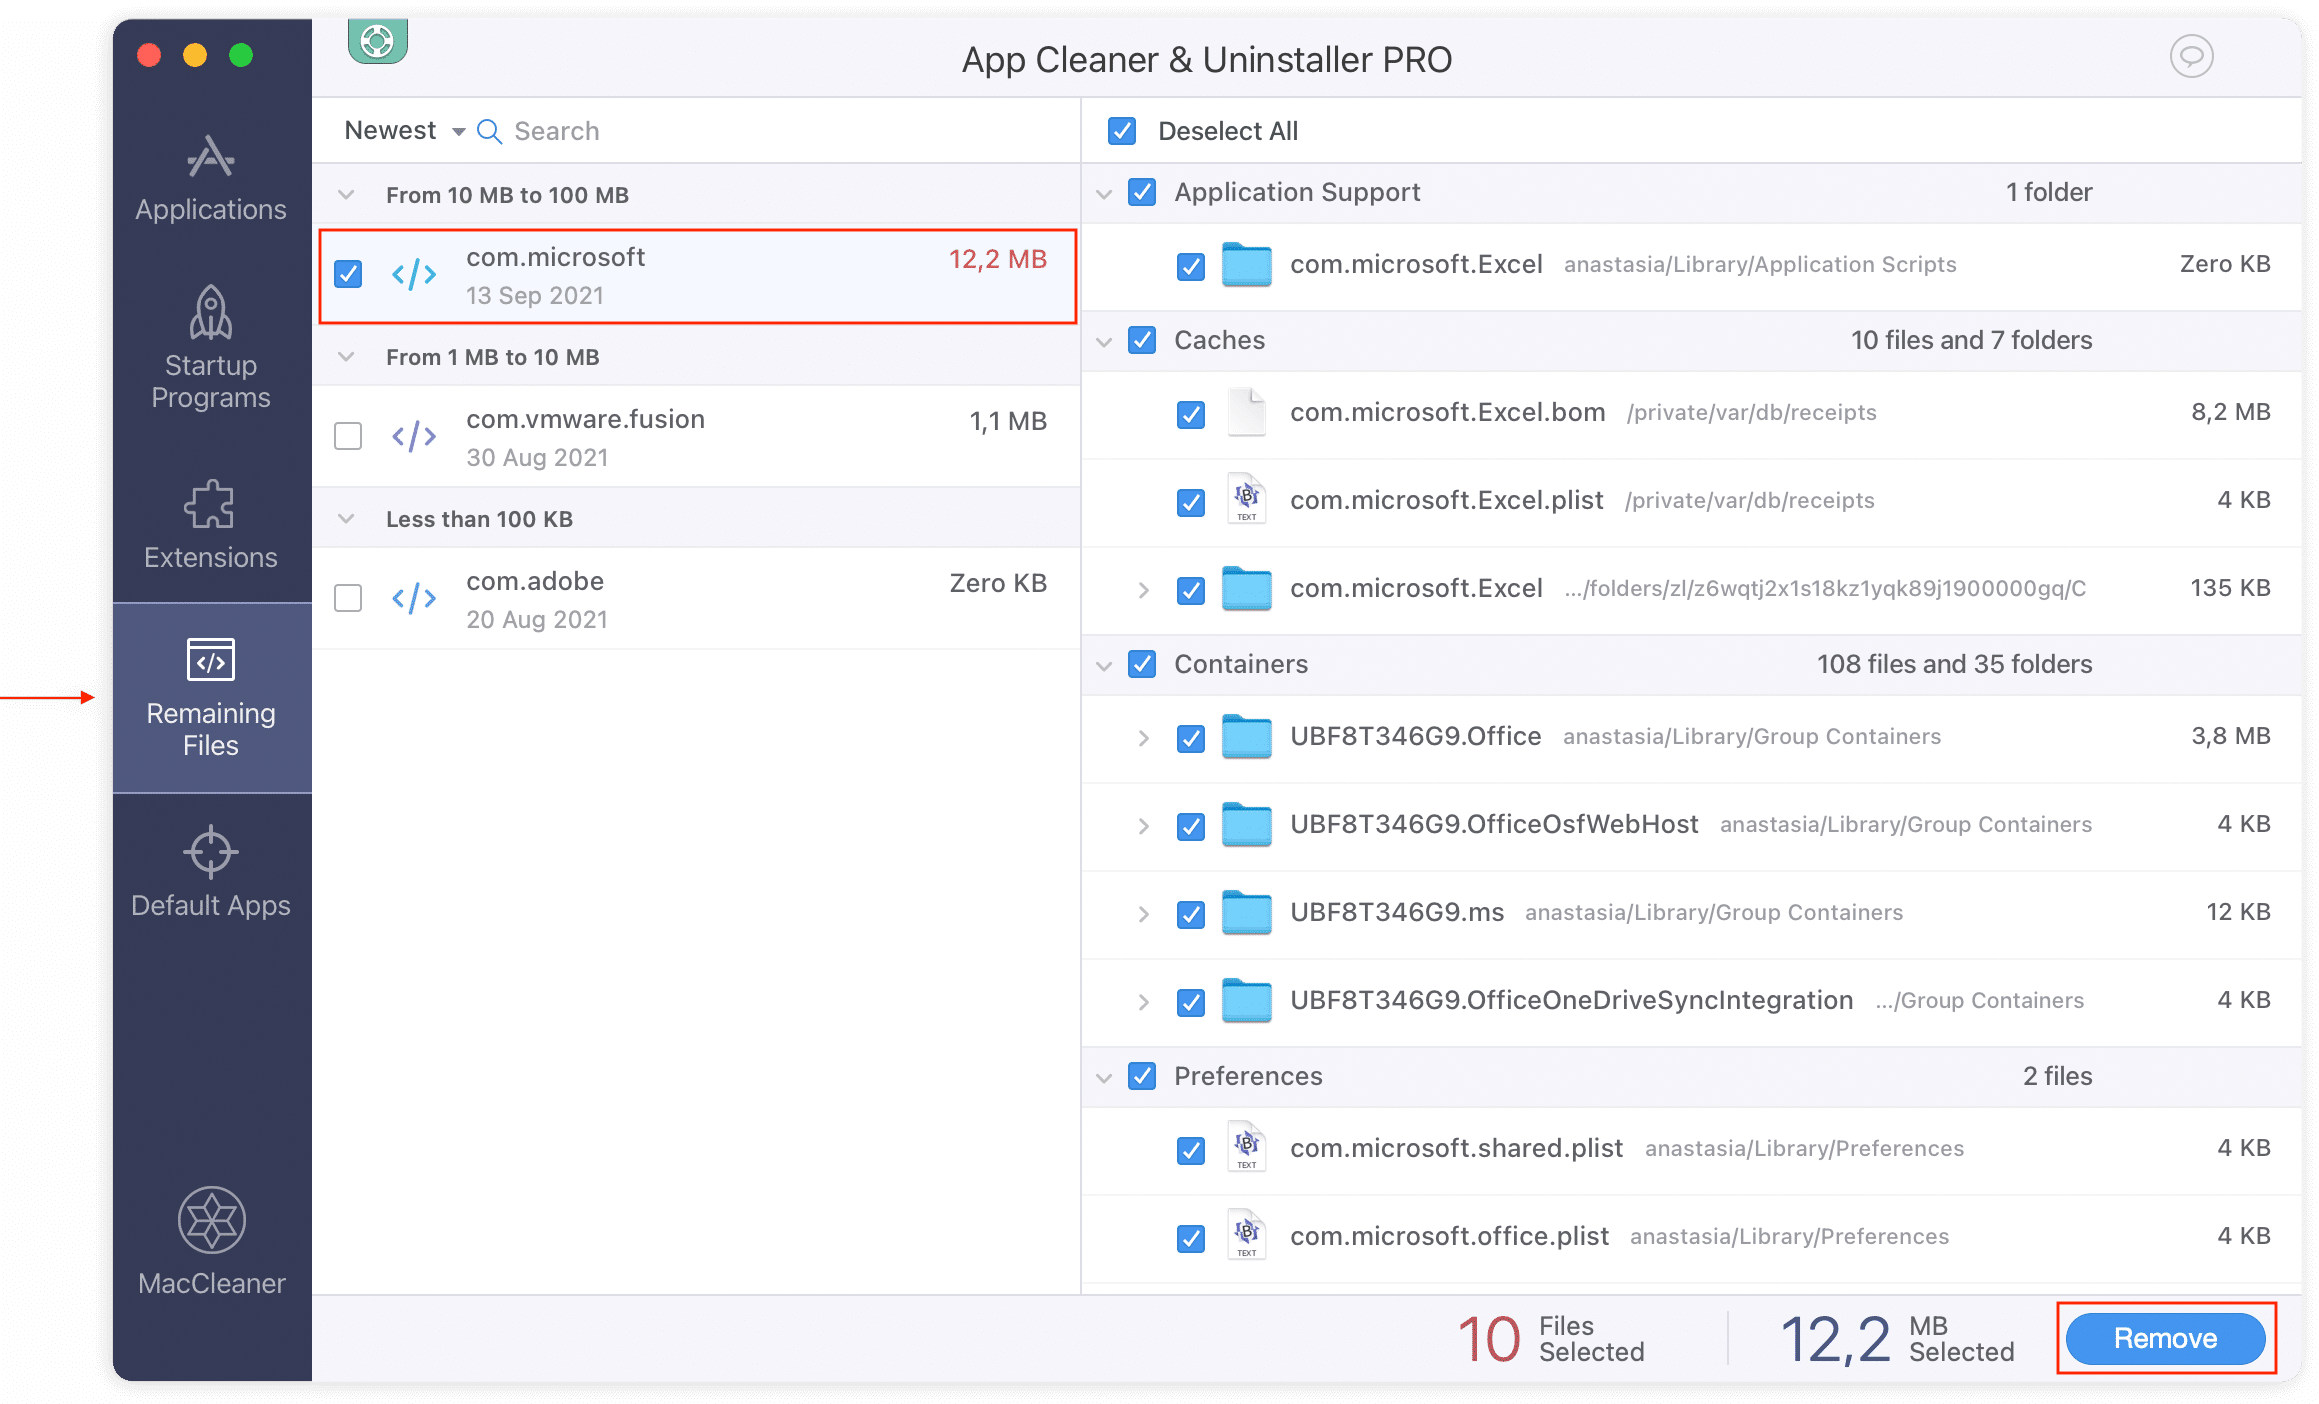 App Cleaner & Uninstaller showing remaining files tab